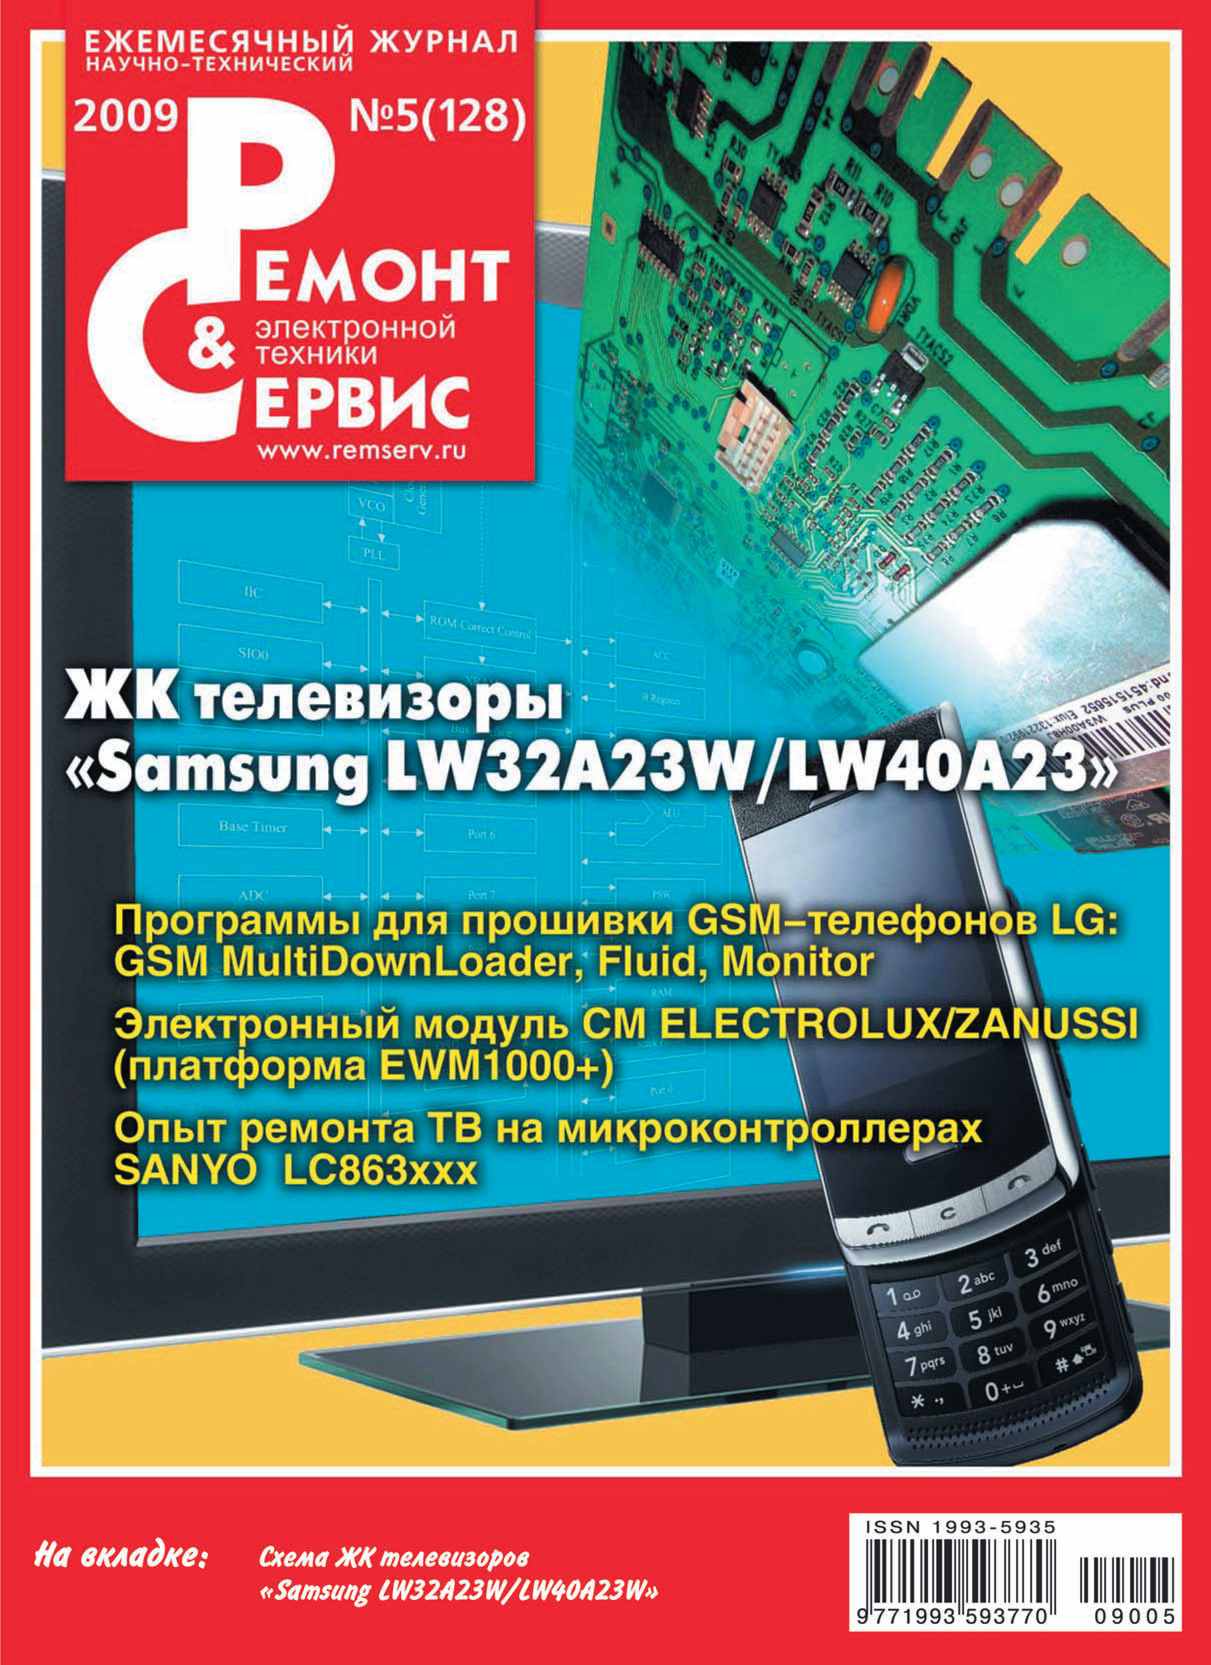 Ремонт и Сервис электронной техники №05/2009